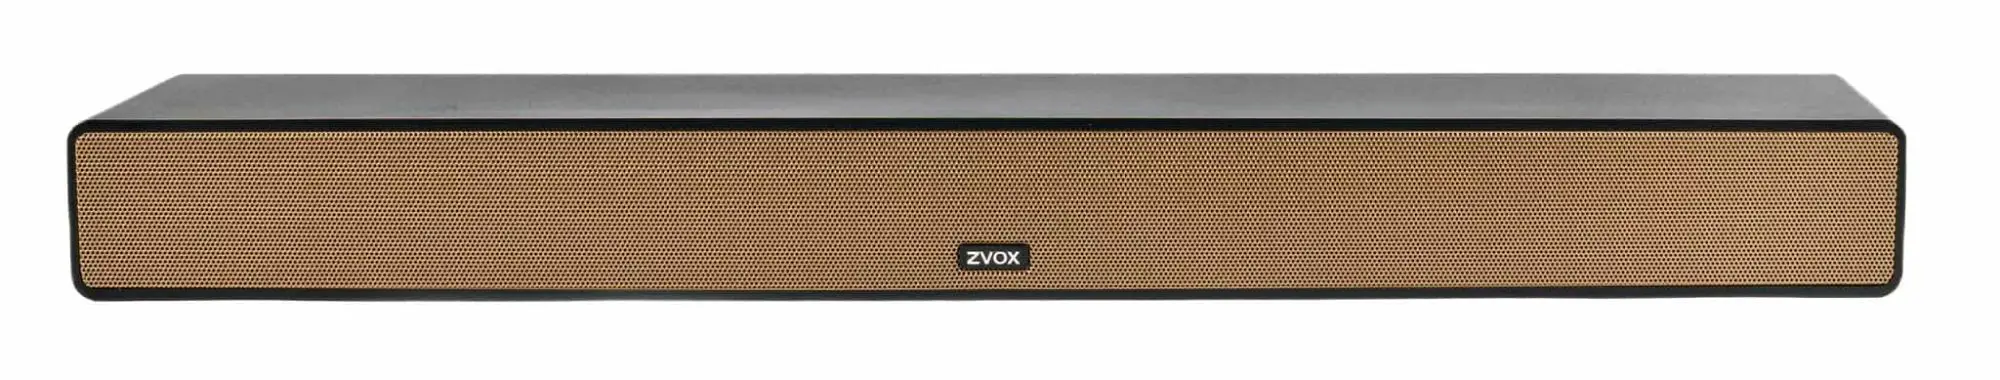 ZVOX announces its AV355 soundbar with dialogue clarification technology